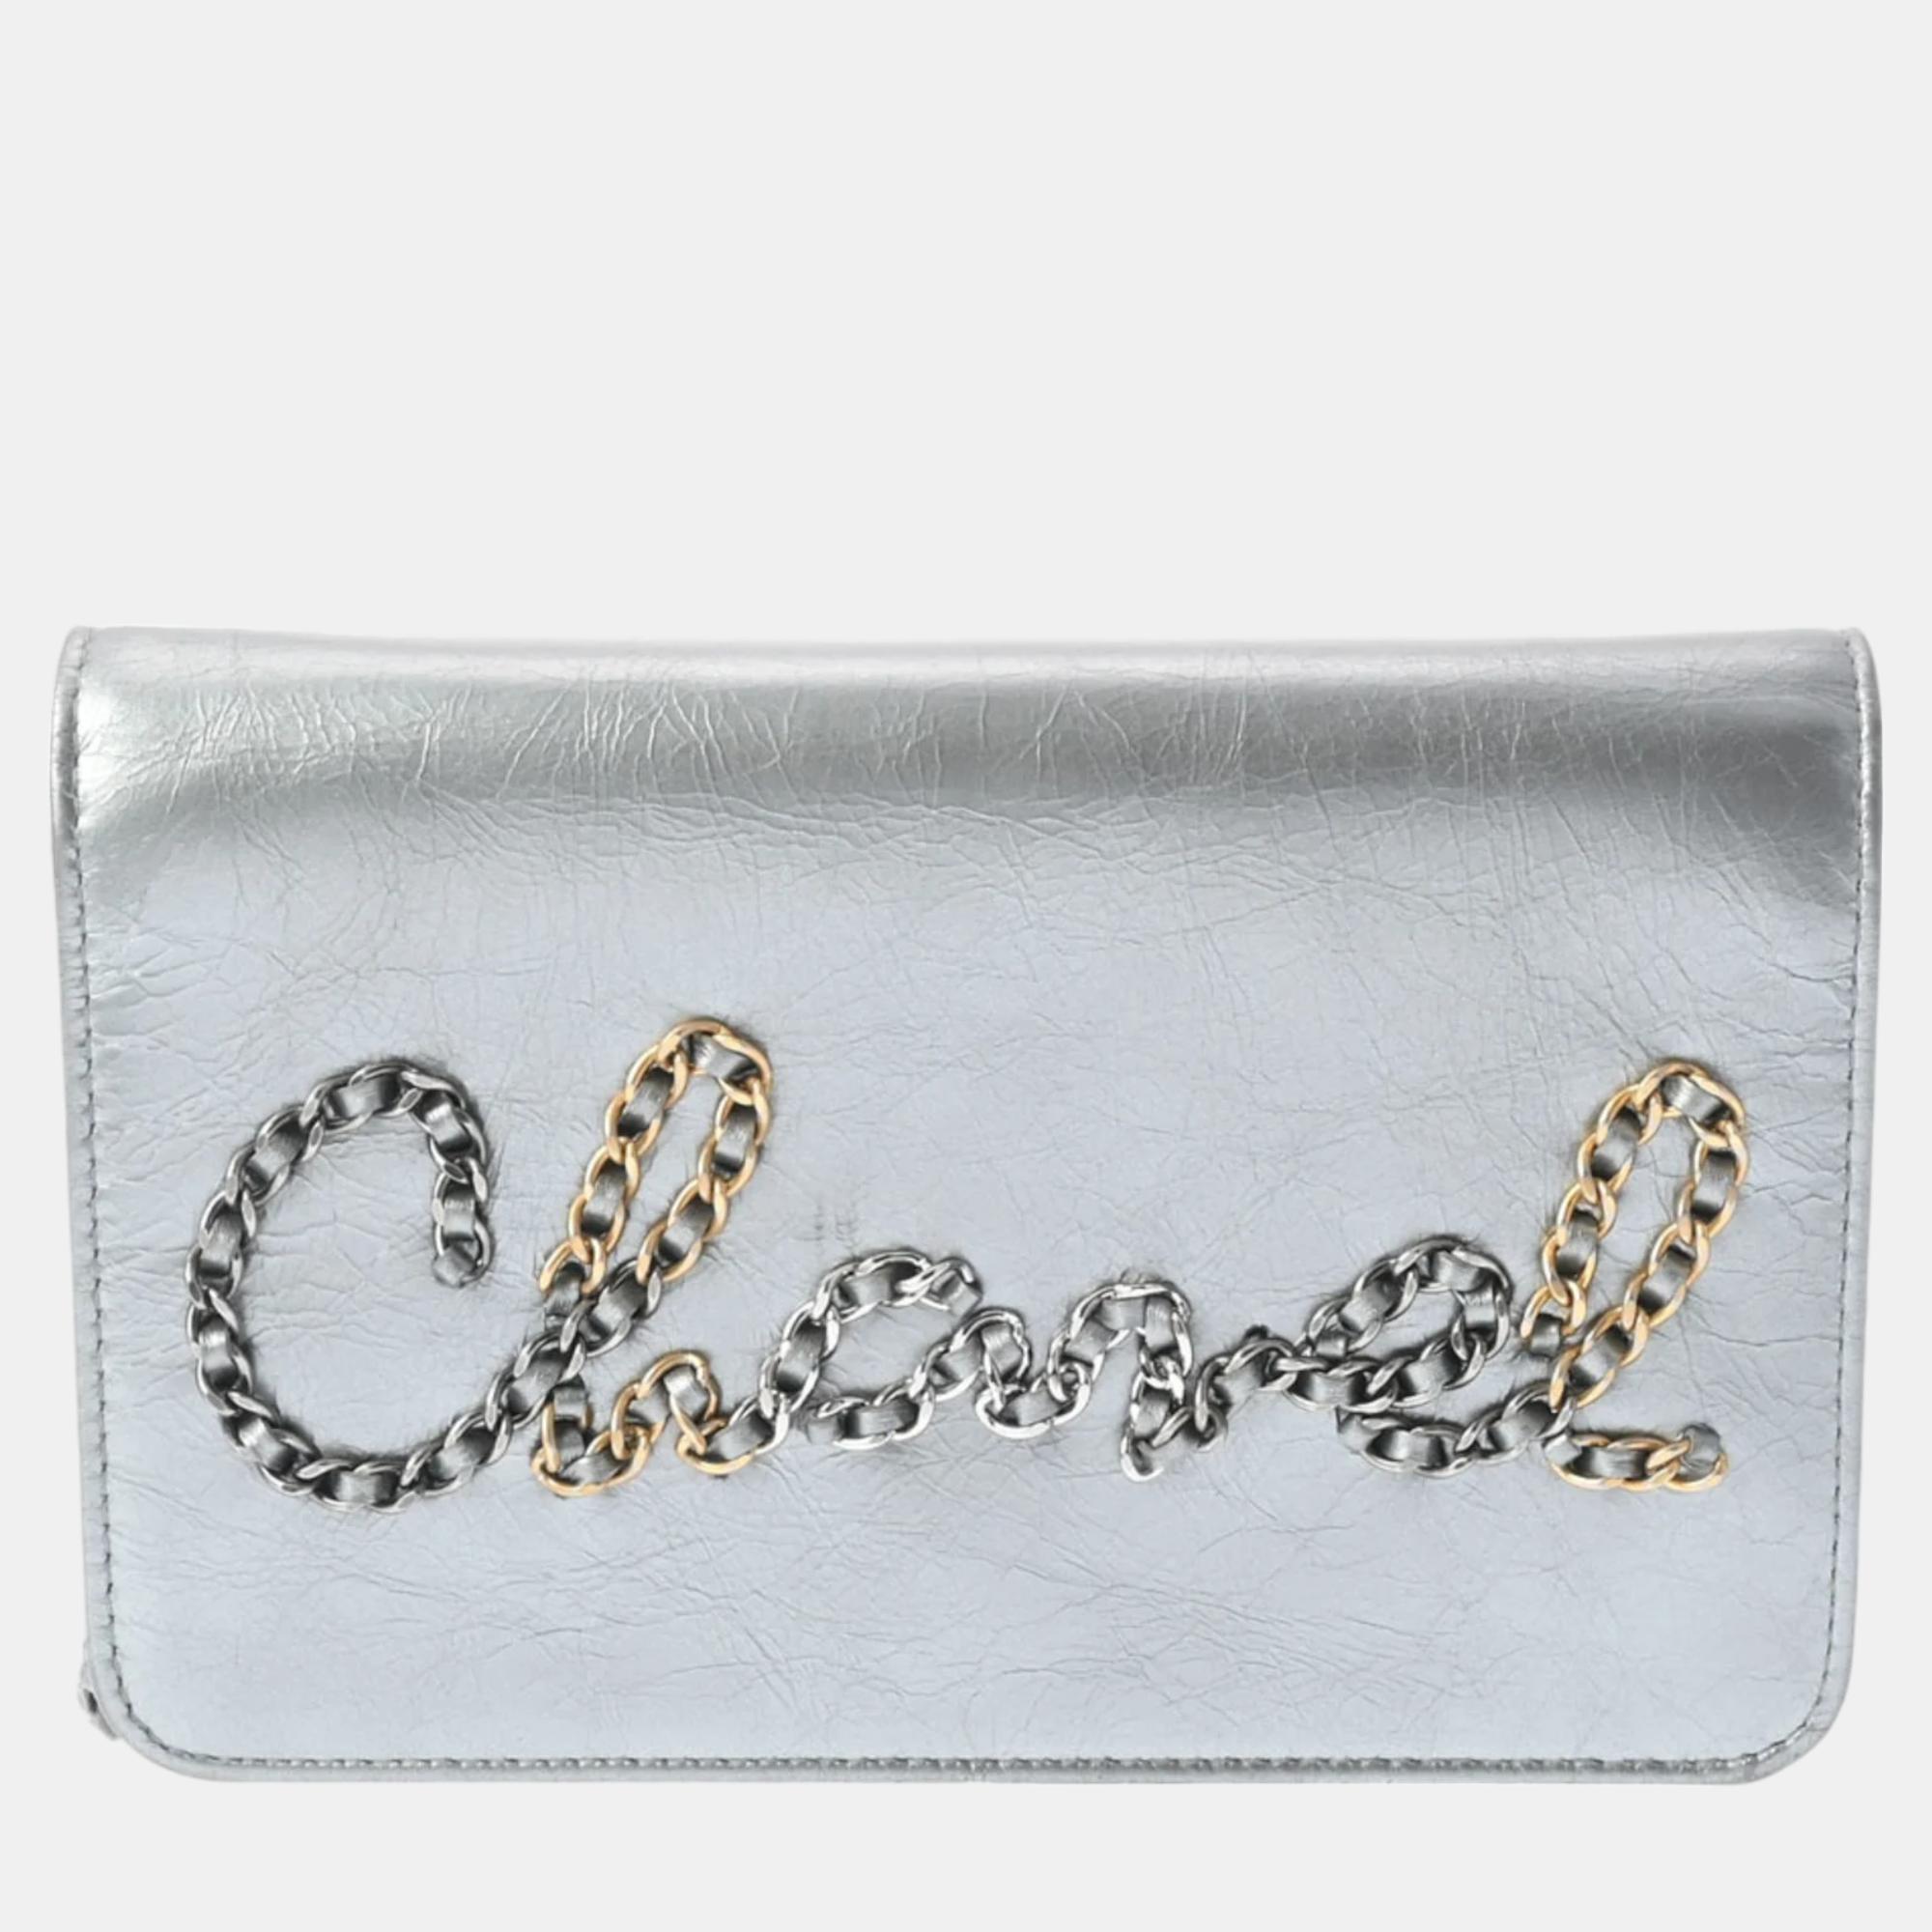 Chanel silver leather written in chain wallet on chain